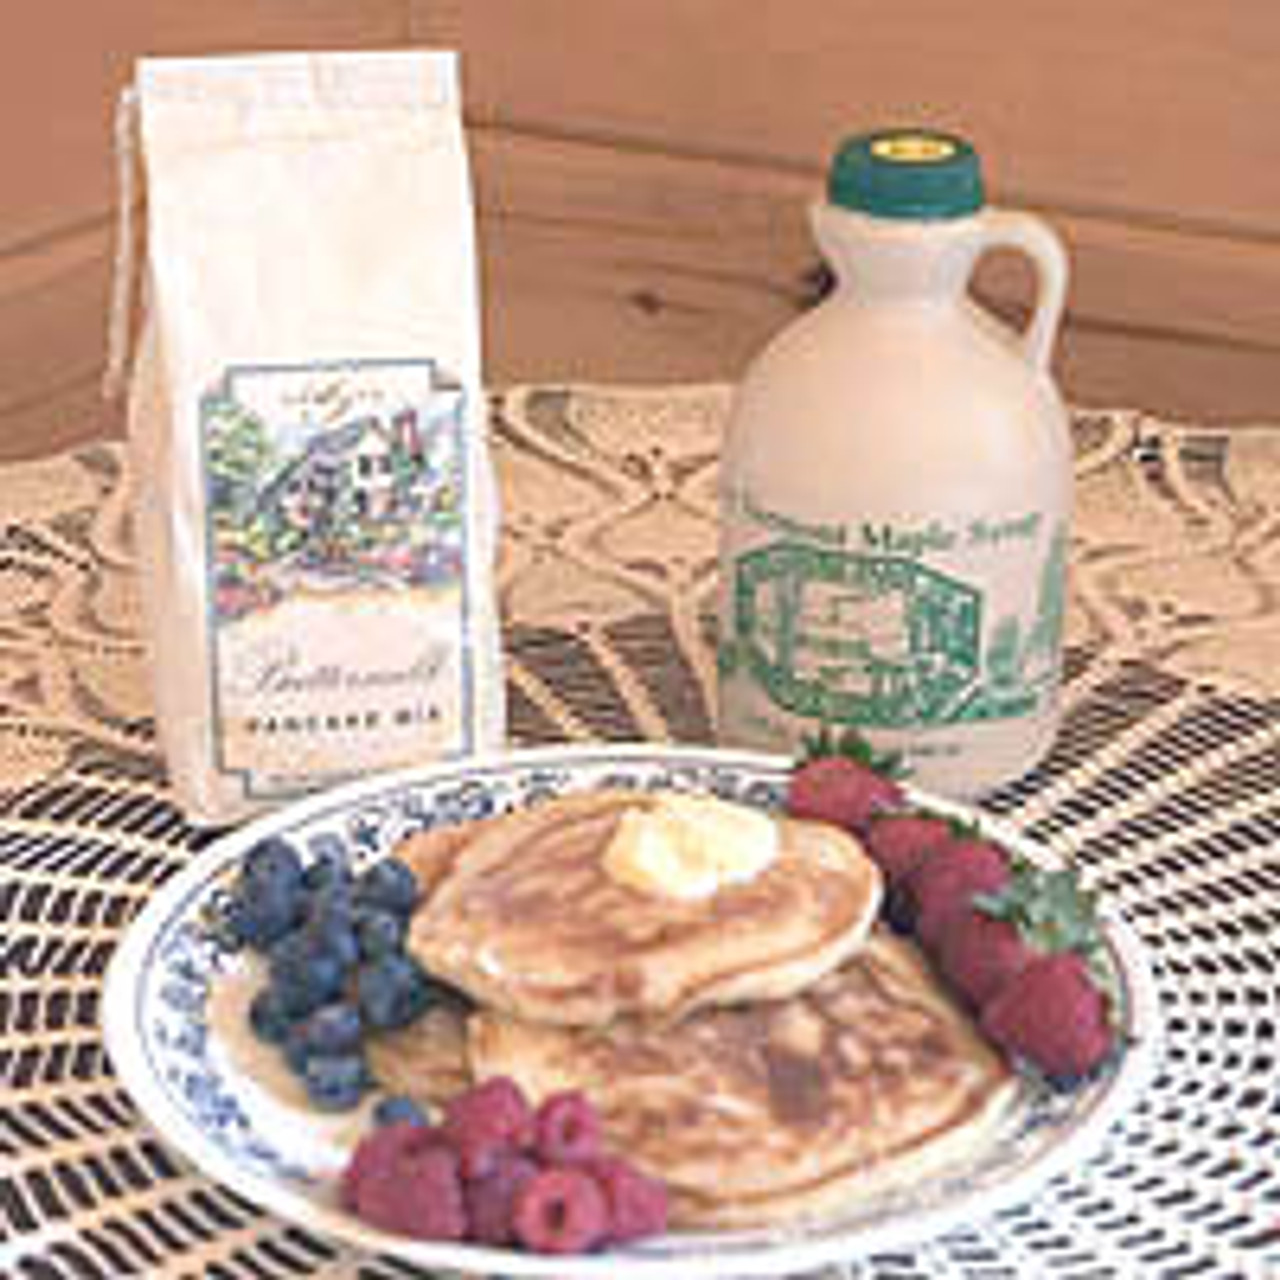 Pancake Breakfast Gift Box – Maple Craft Foods